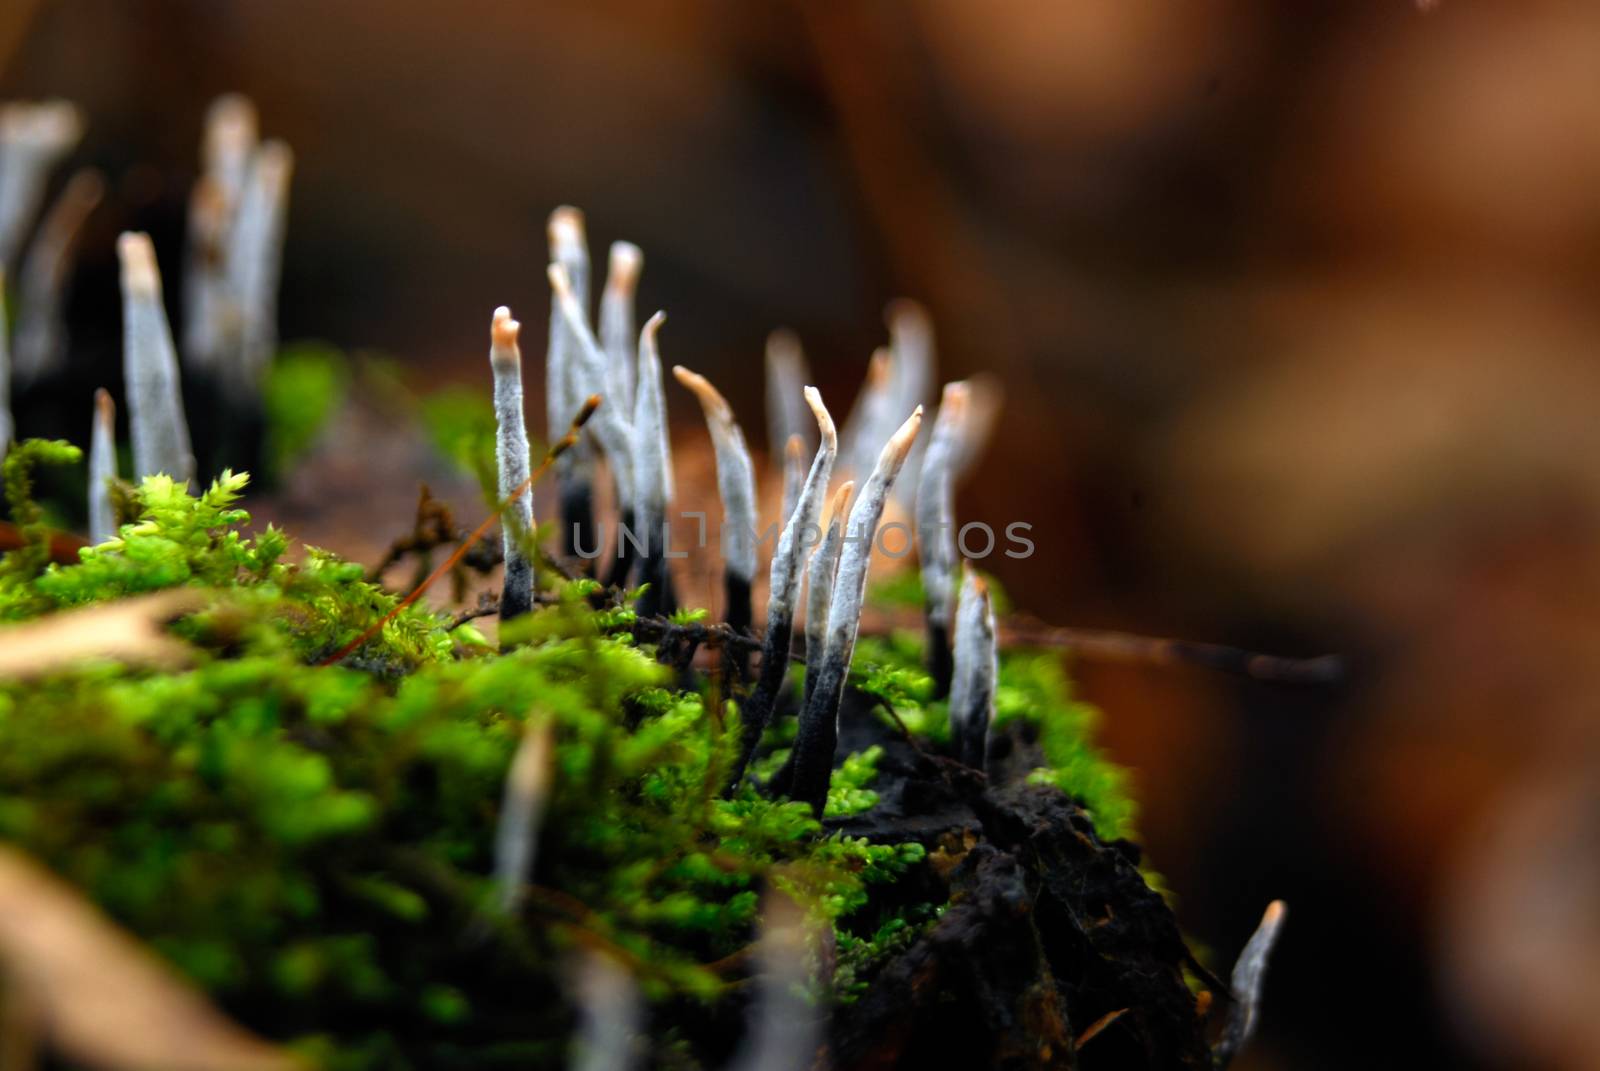 Fungus mushroom white growing between green moss by MXW_Stock